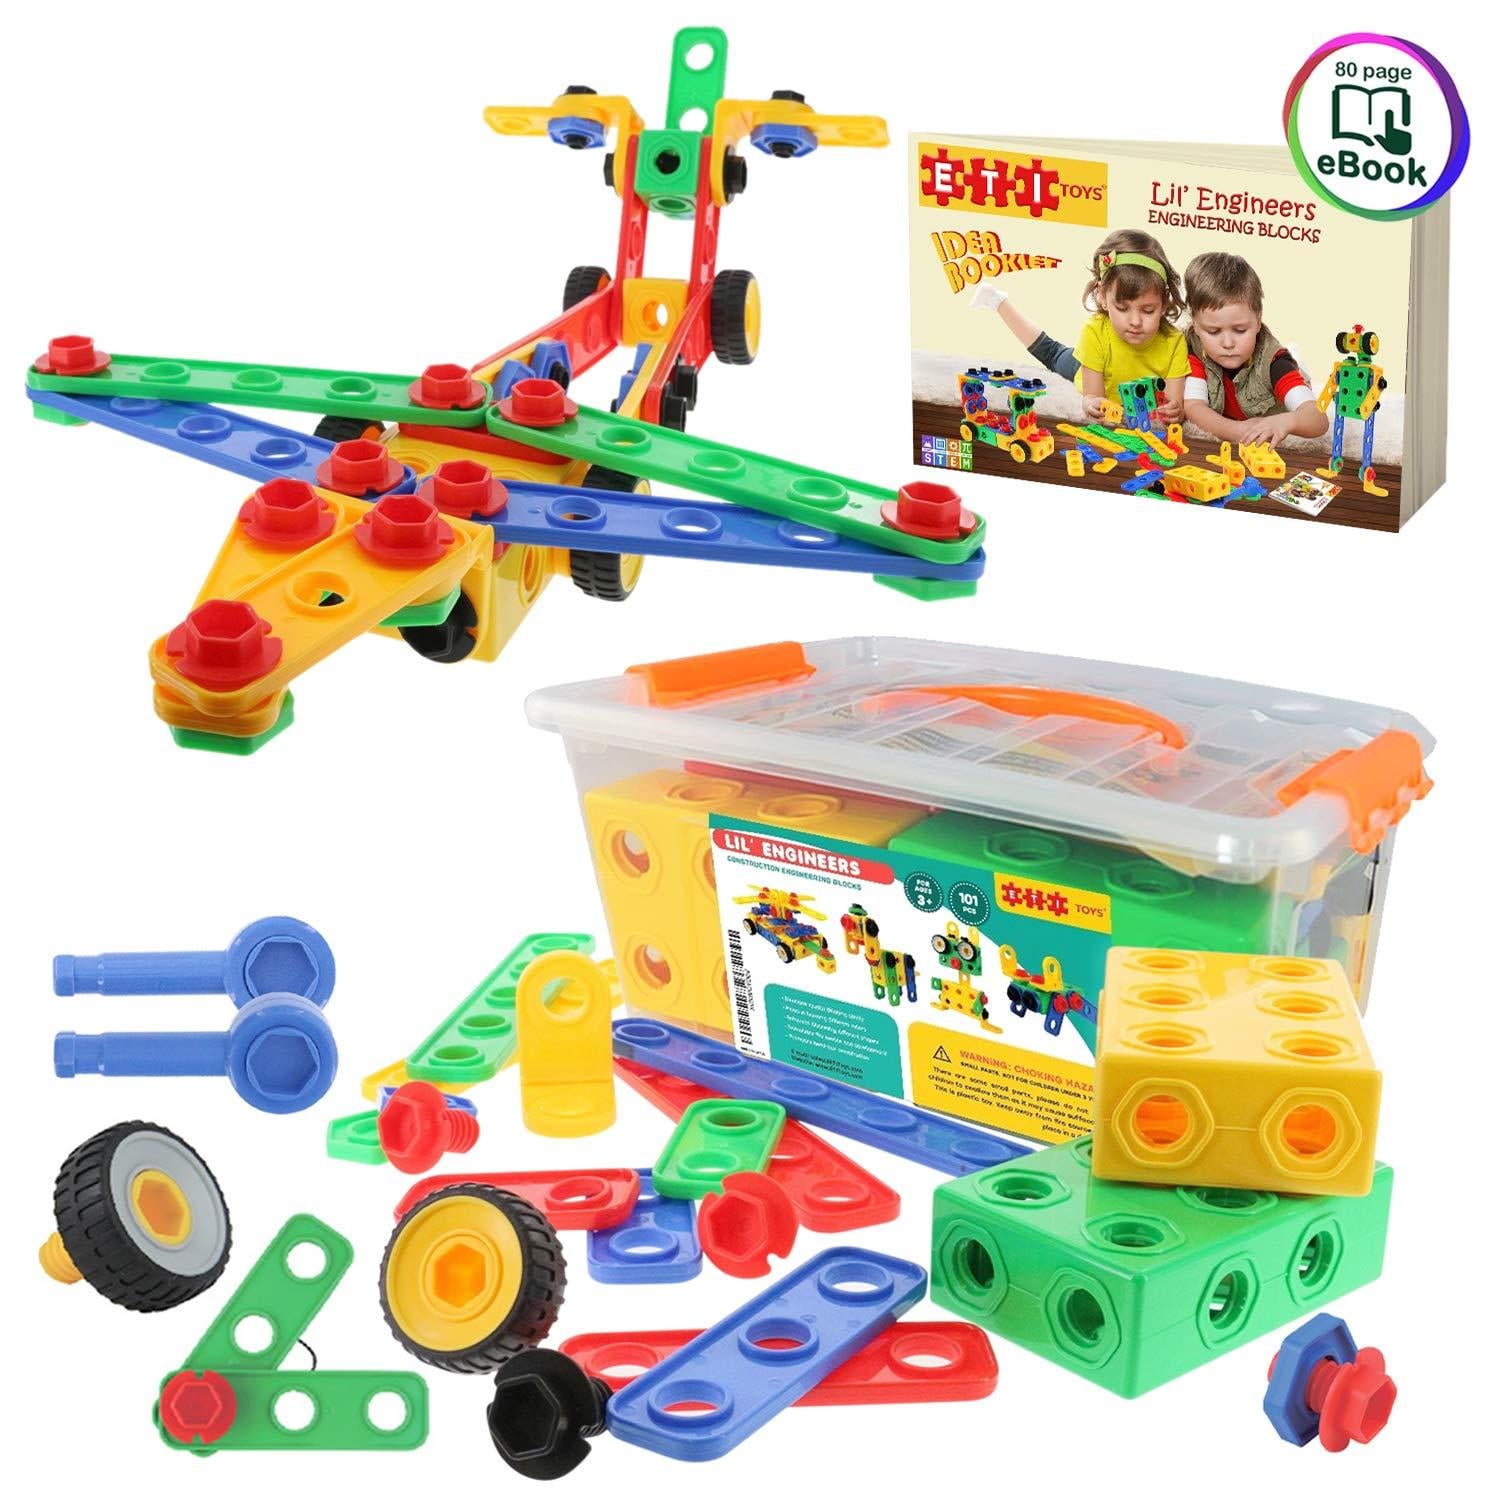 ETI Toys | STEM Learning | Original 101 Piece Educational ...